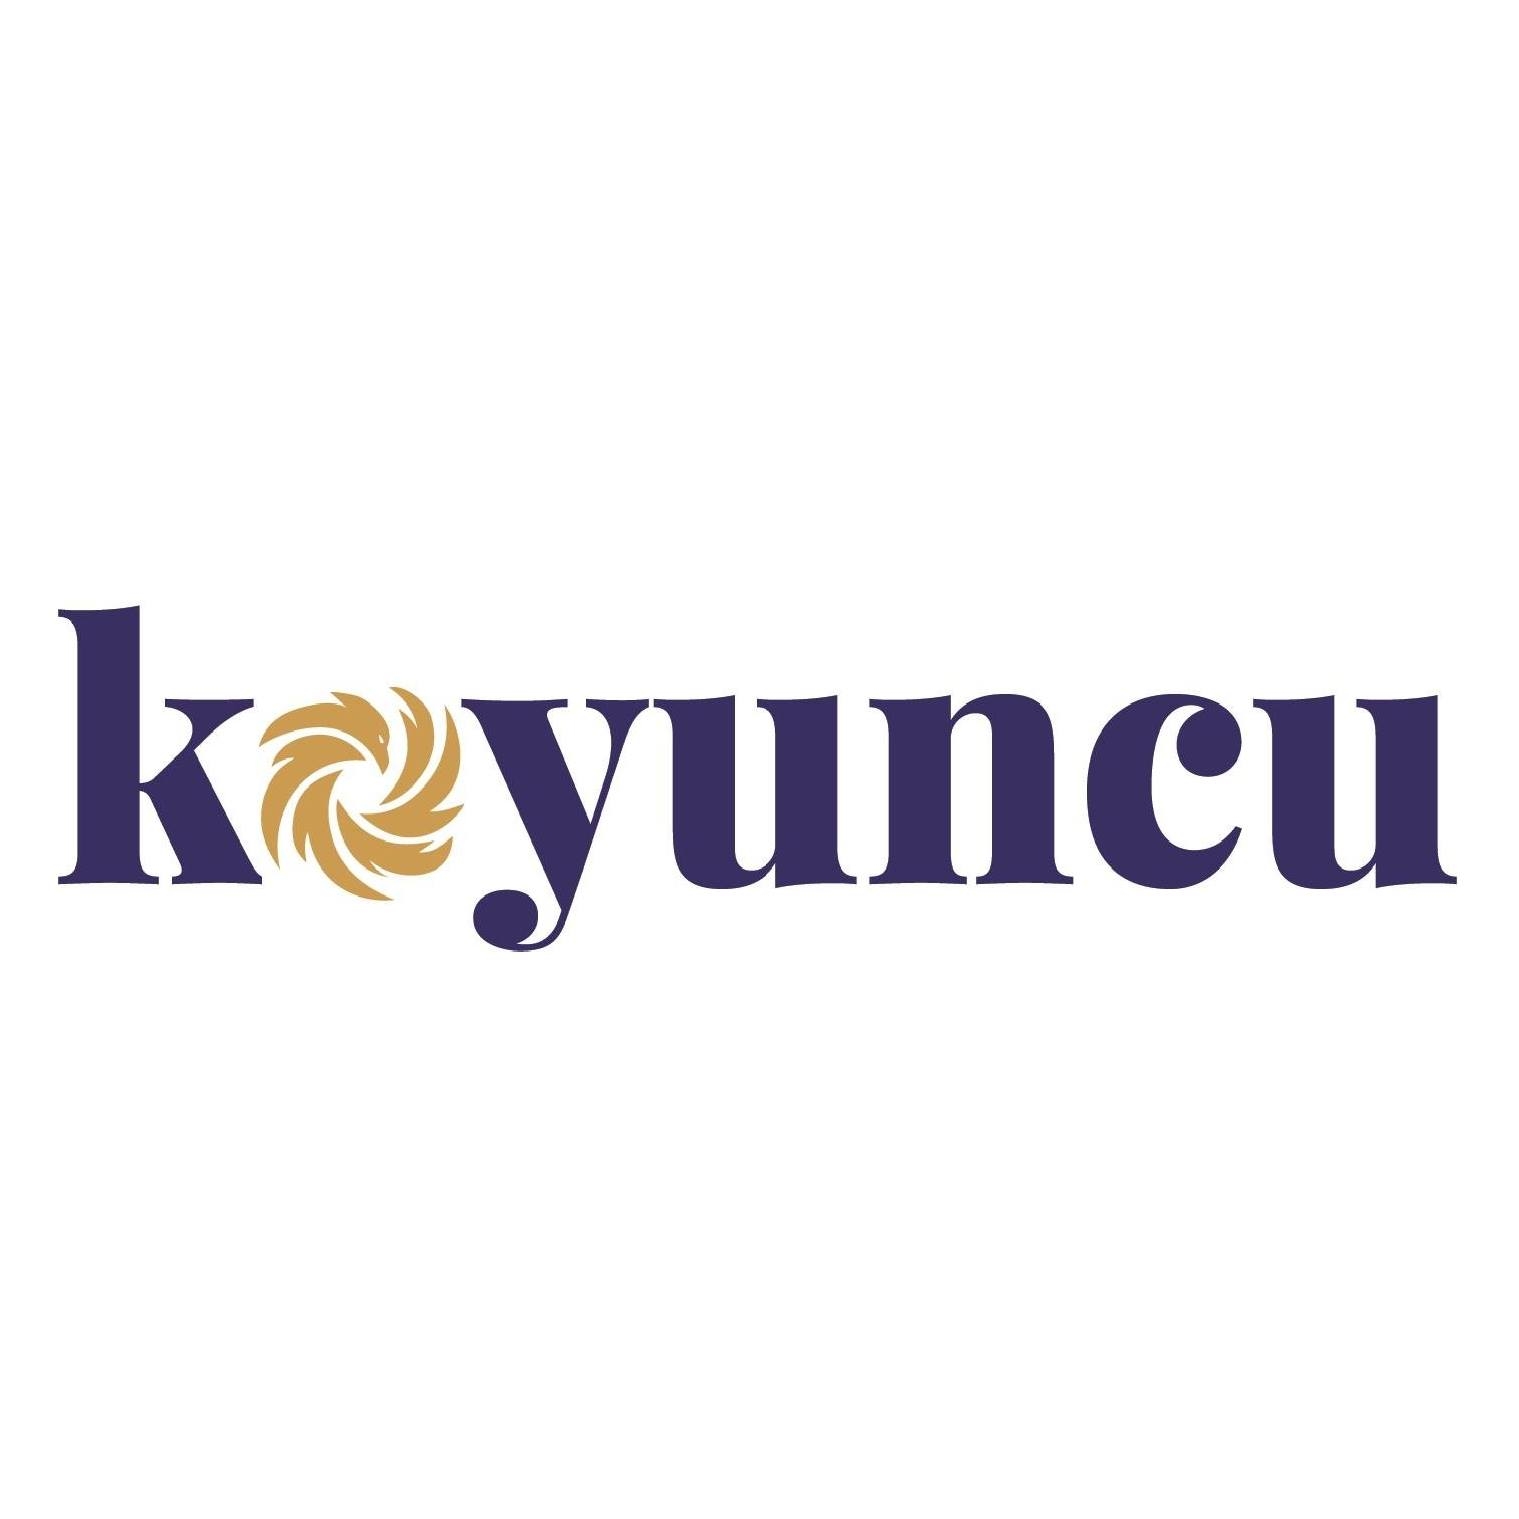 Koyuncu Group companies